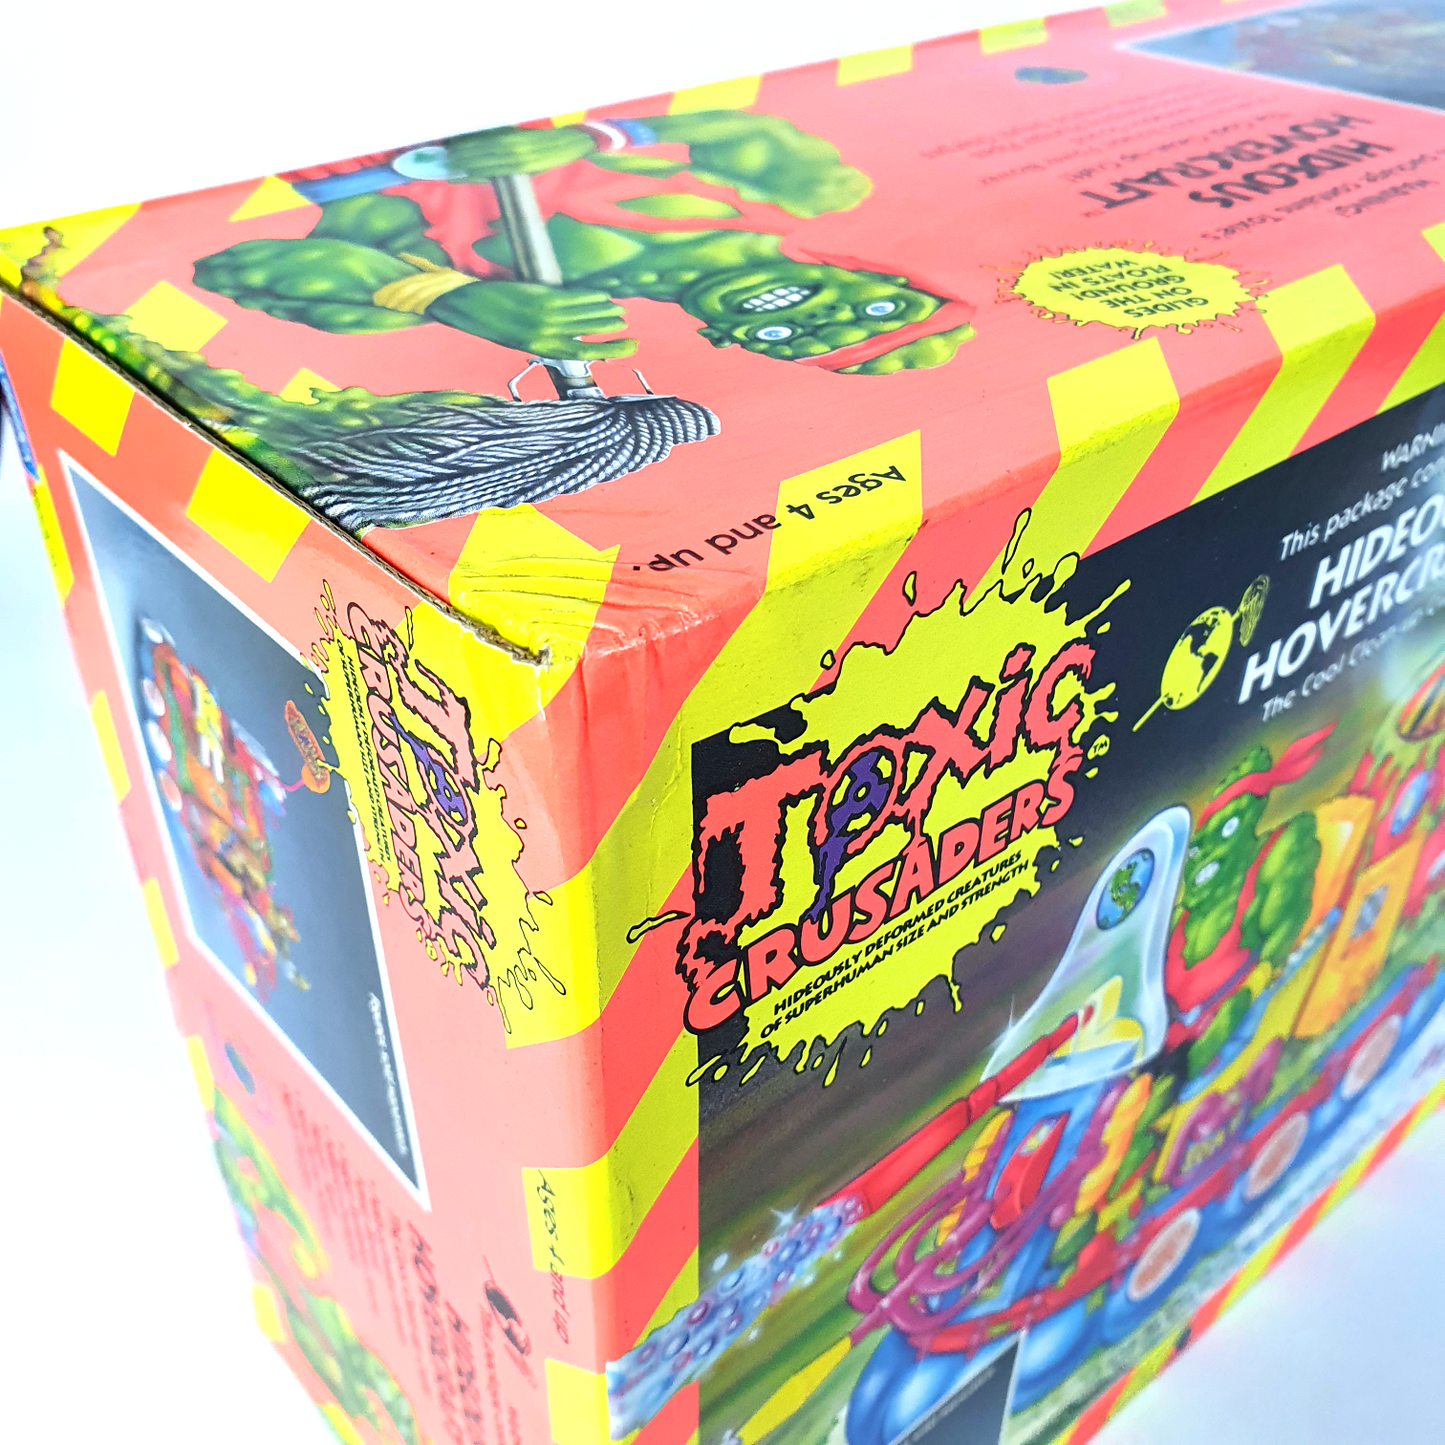 TOXIC CRUSADERS ☆ HIDEOUS HOVERCRAFT Action Figure Vehicle ☆ MISB BOXED SEALED Vintage Original 90s Playmates